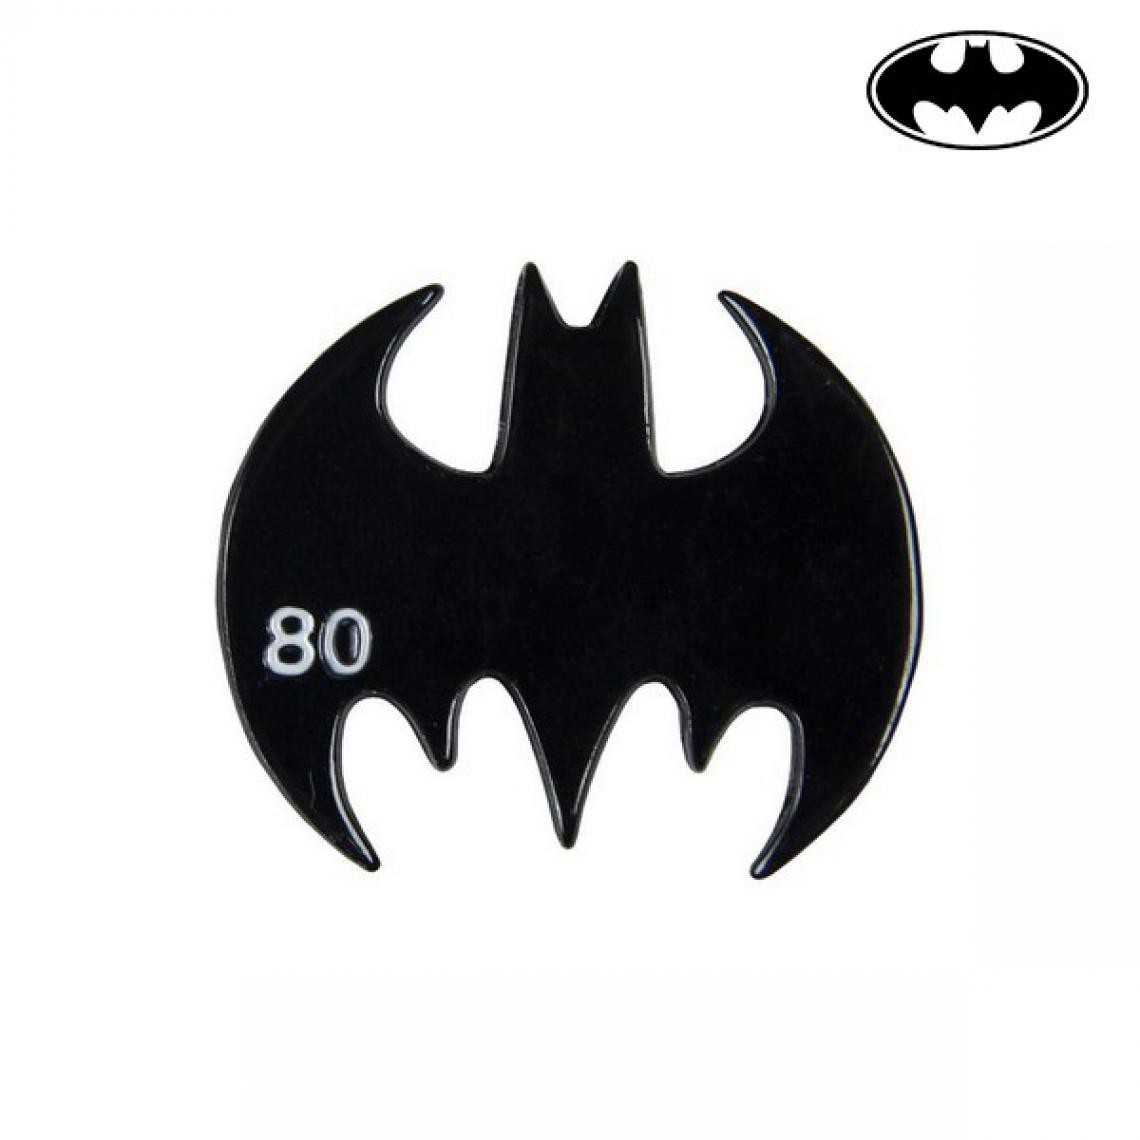 Batman - Broche Batman Métal Noir - Accessoires Bureau